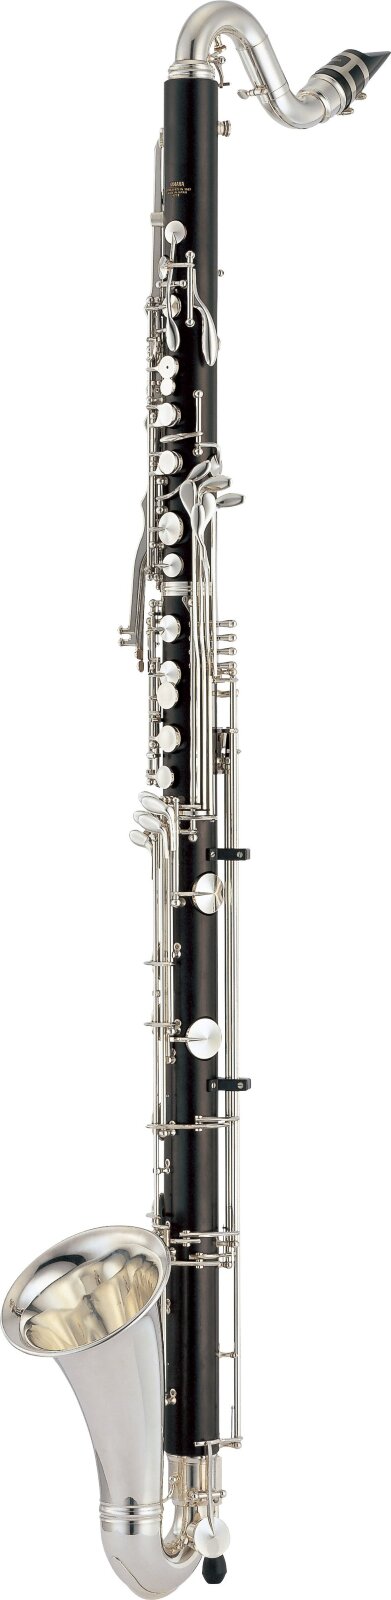 Yamaha YCL-622II Clarinette basse descendant au Do grave : photo 1